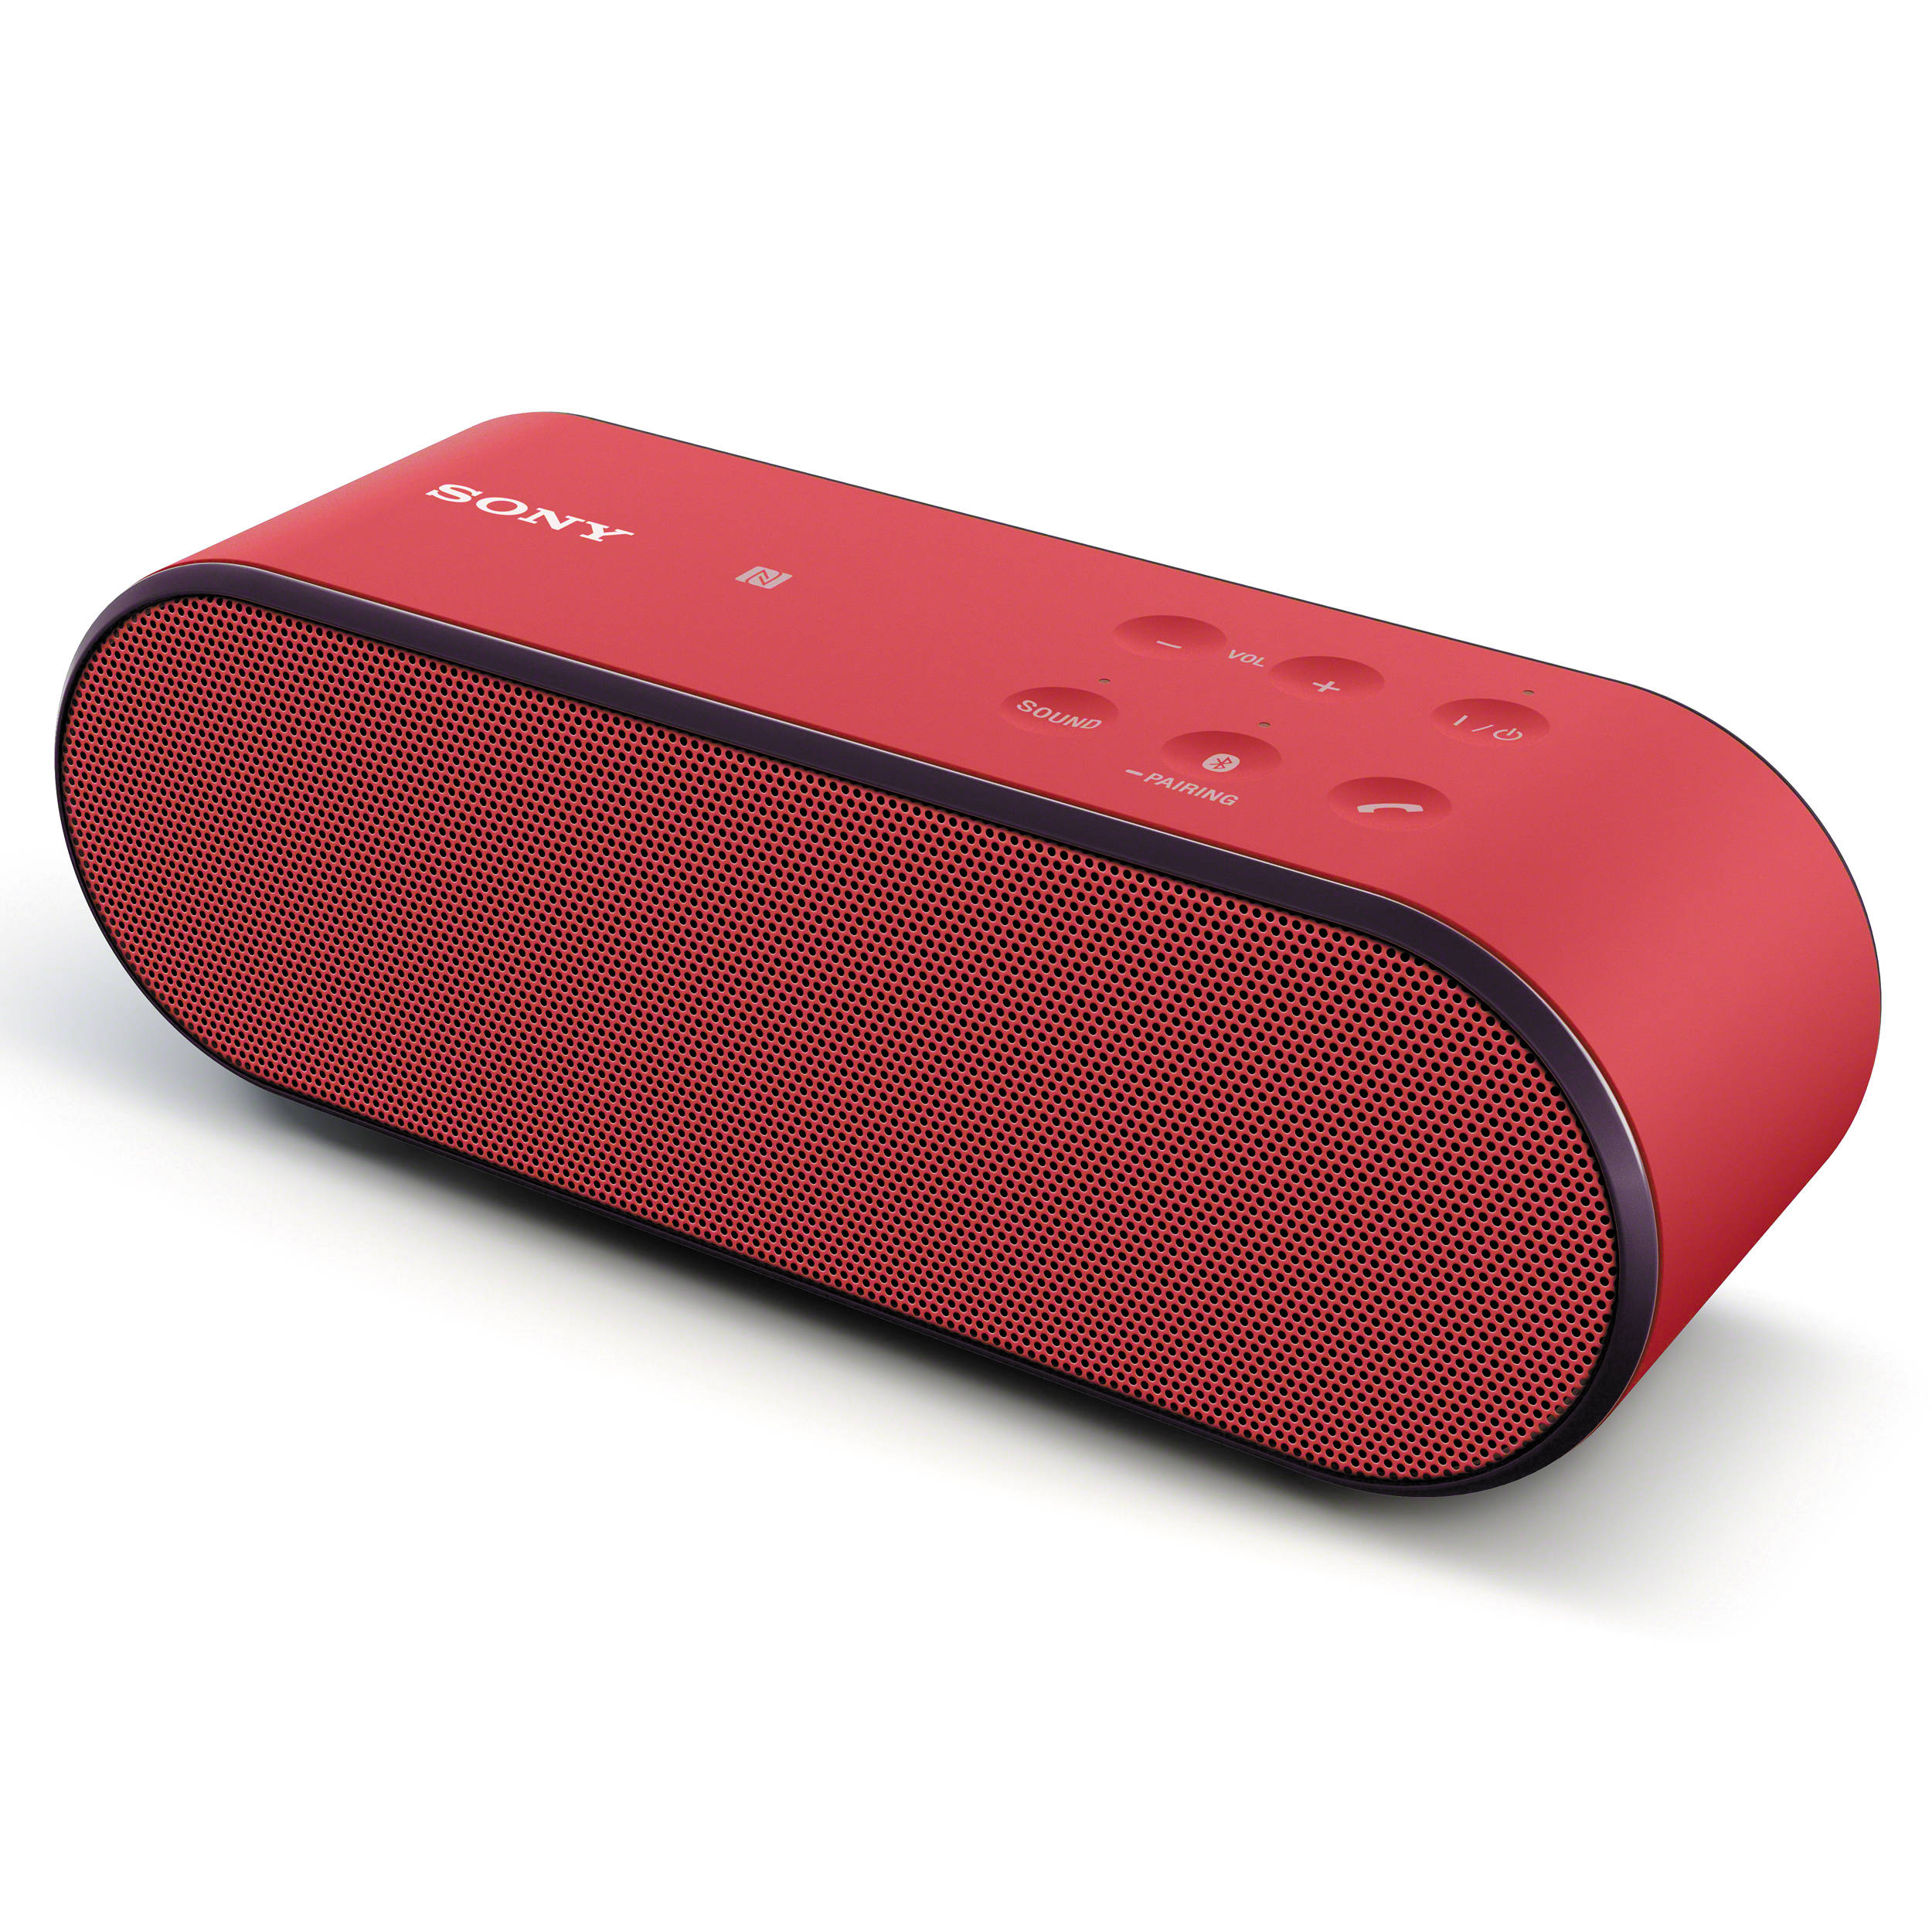 sony bluetooth speaker red